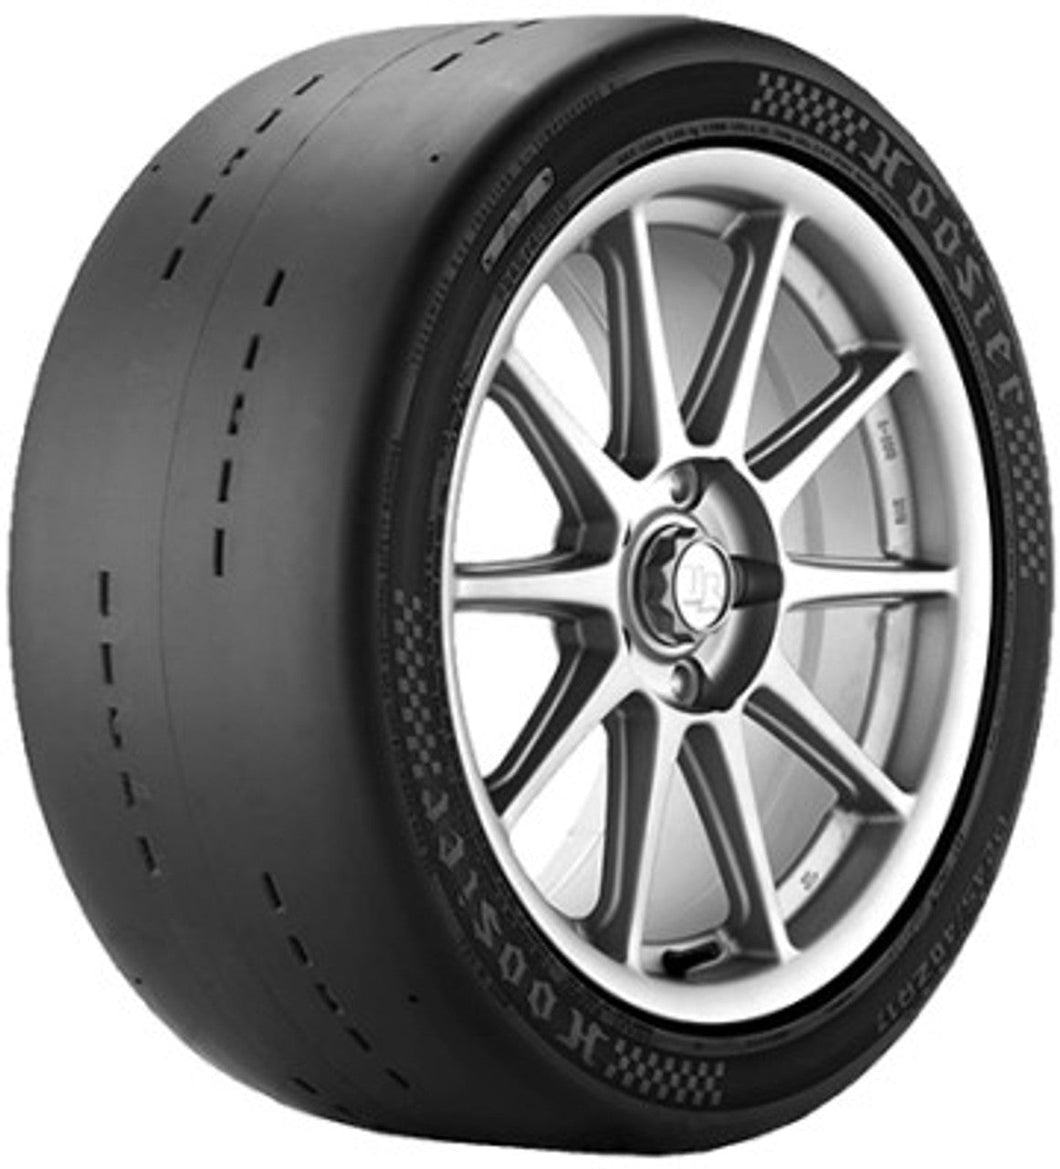 295/40 ZR18 Hoosier Tire Slick D.O.T Neumático